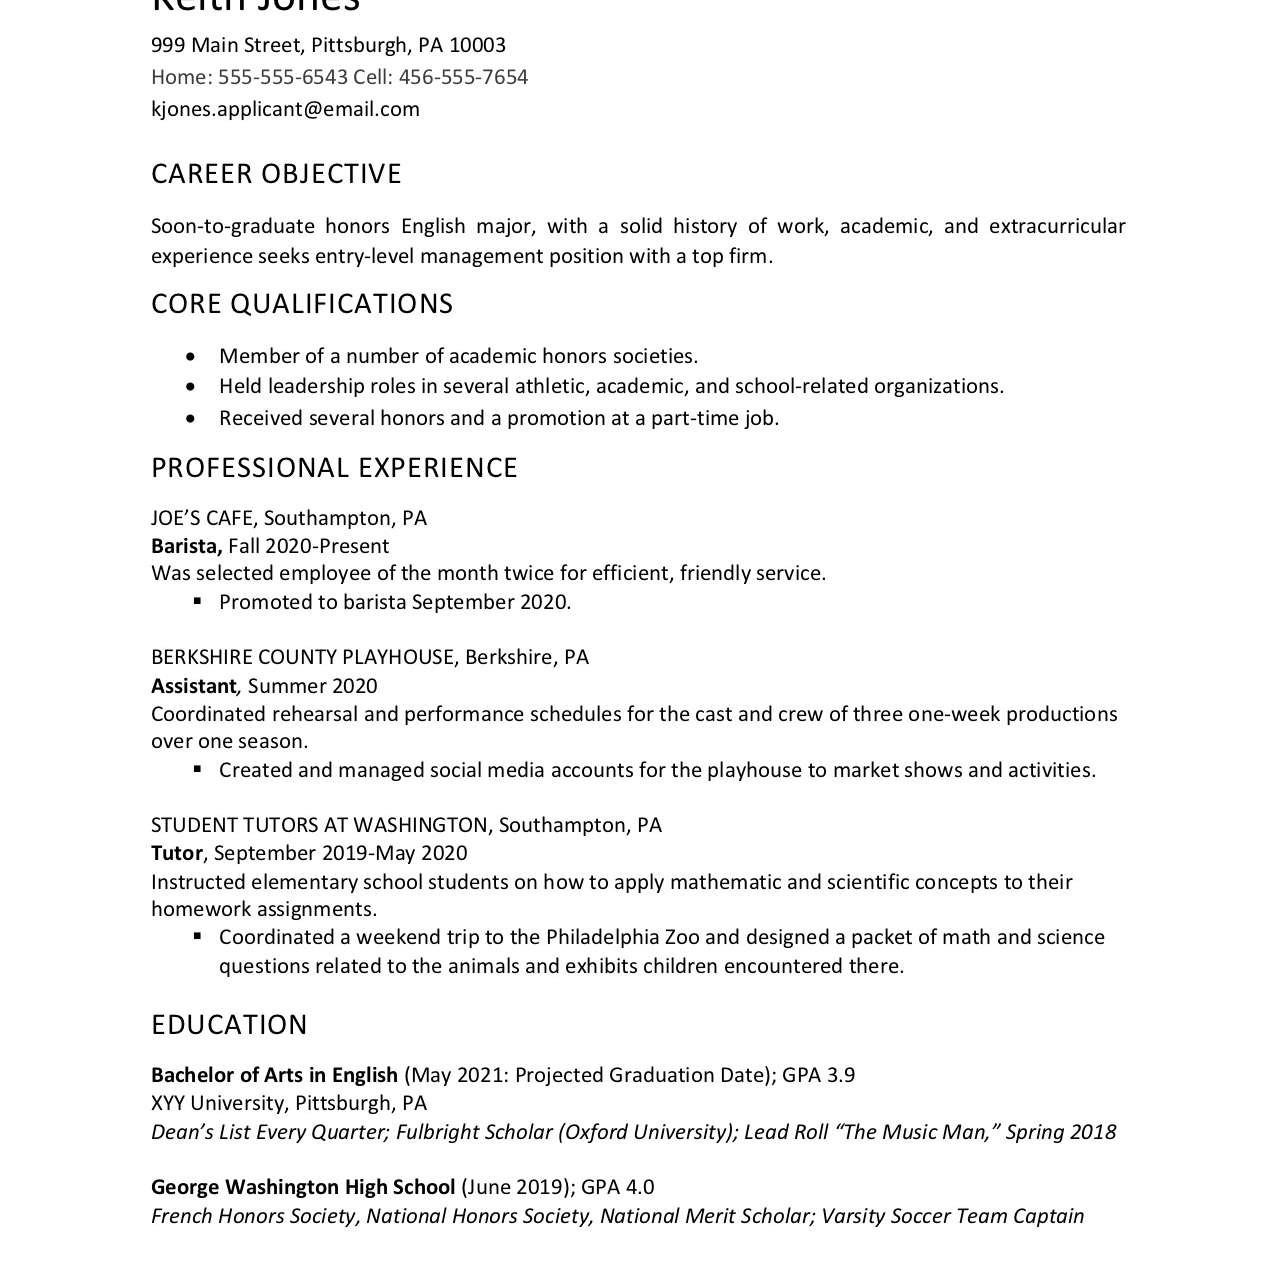 Sample Resume for Graduate School Education High School Graduate Resume Example and Writing Tips